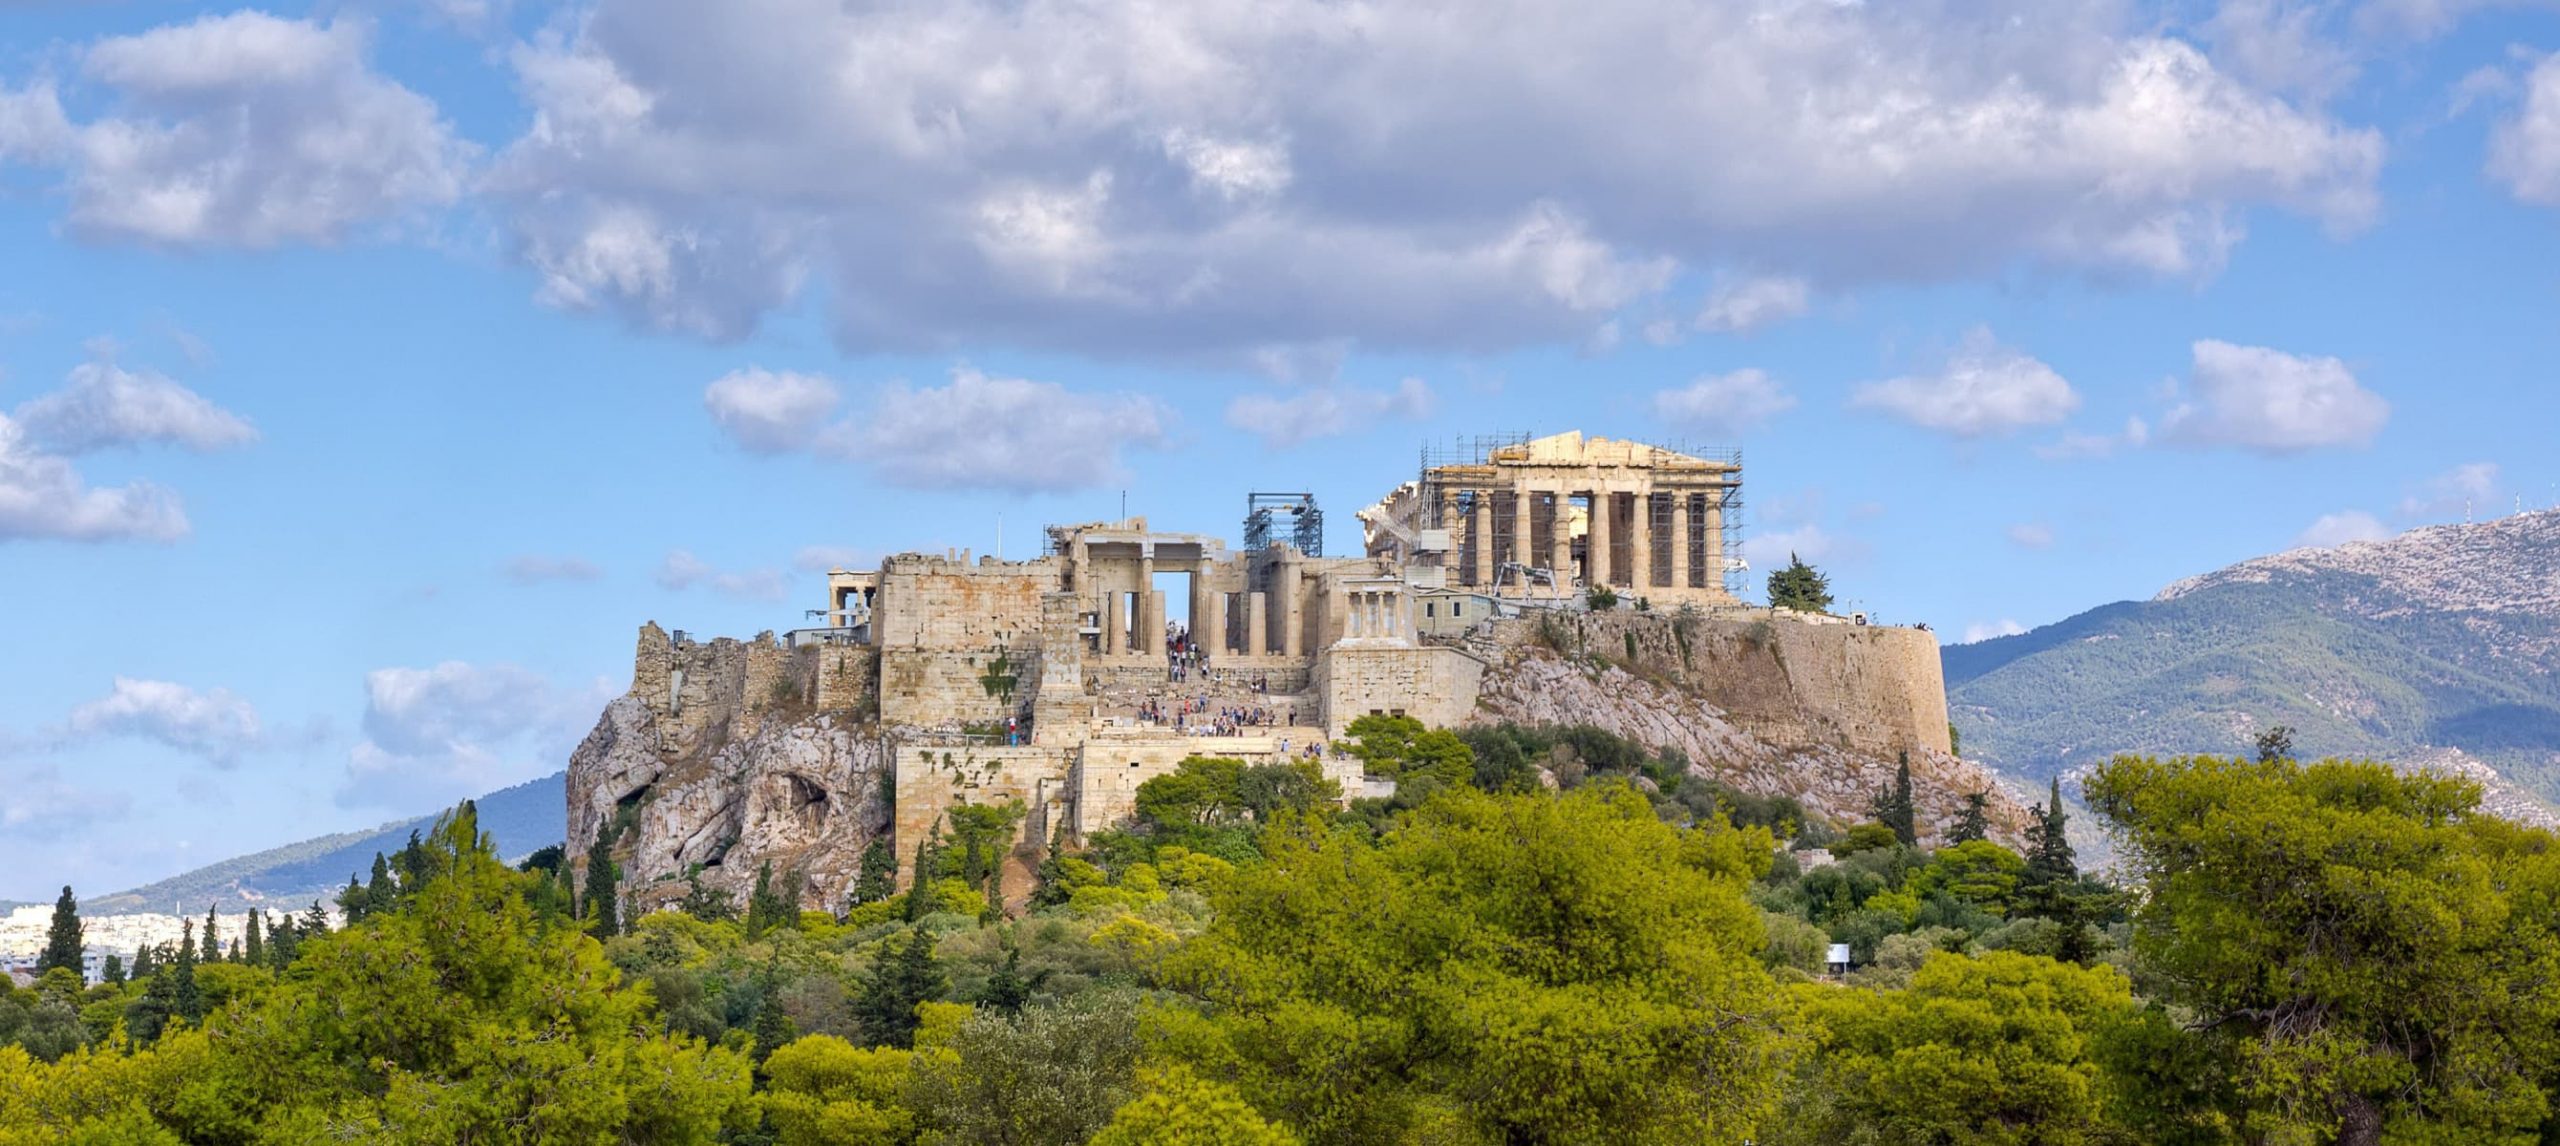 The 5 Best Hotels Near Parthenon In Greece